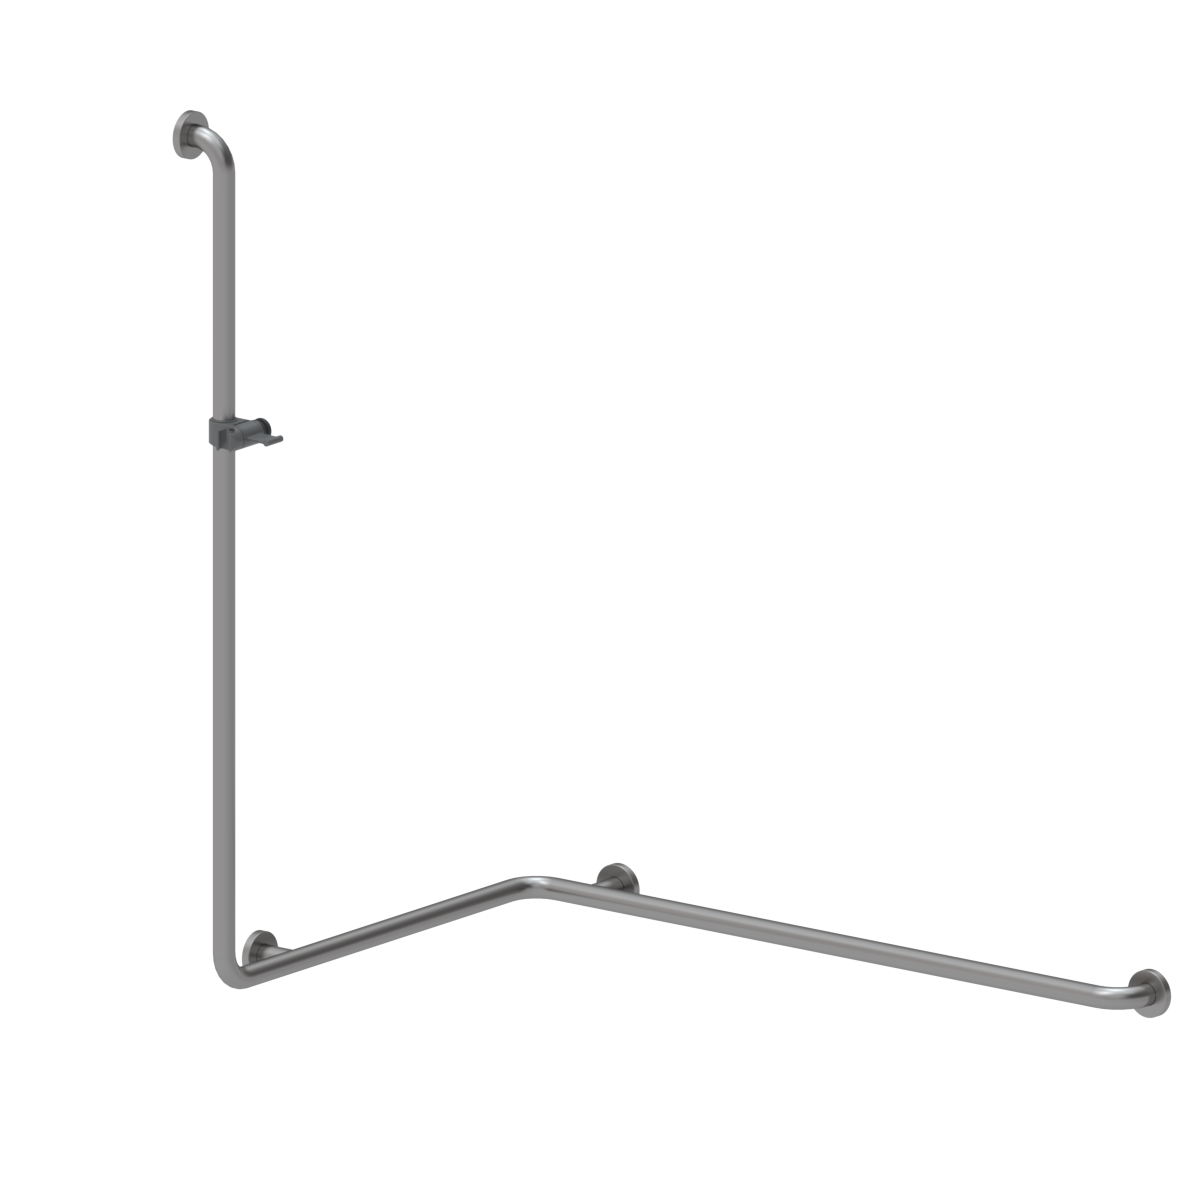 Inox Care Duschhandlauf, mit Brausehalterstange, links, 1100 x 750 x 1200 mm, Edelstahl, Brausehalter in Dunkelgrau (018)